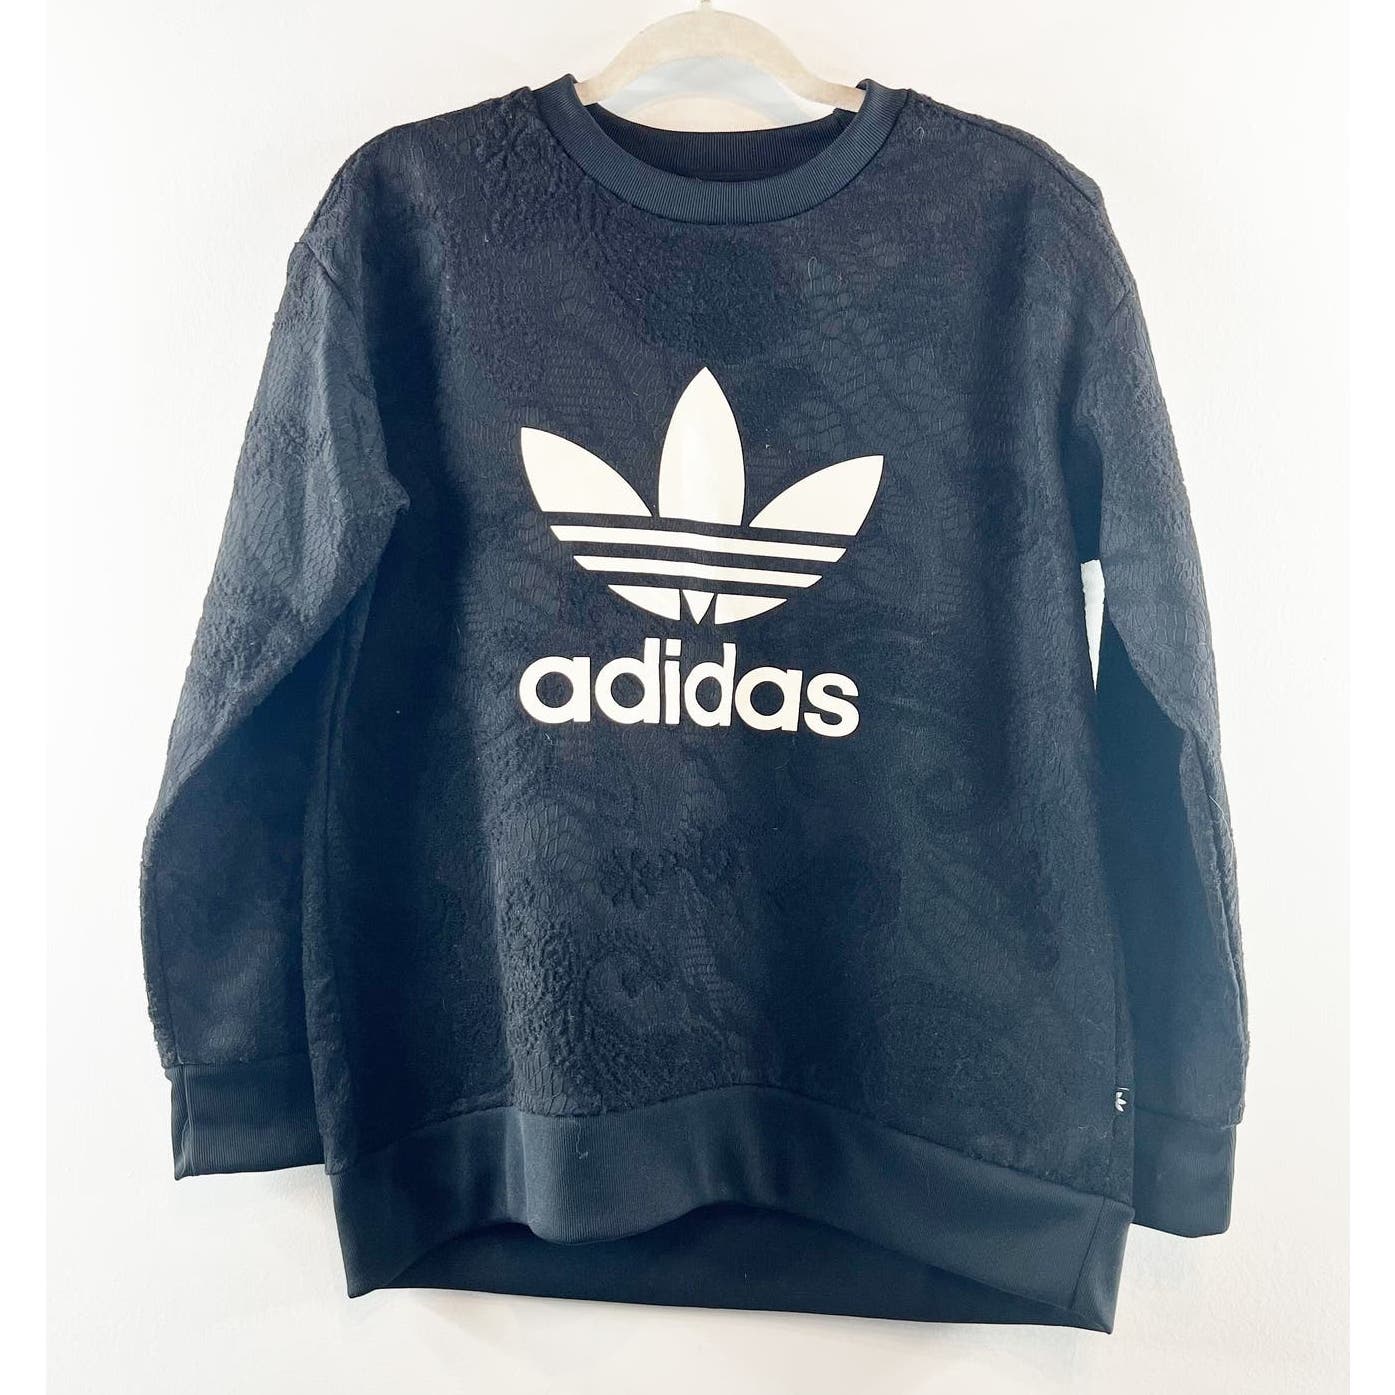 Adidas Limited Edition Trefoil Lace Textured Crewneck Sweatshirt Black Small